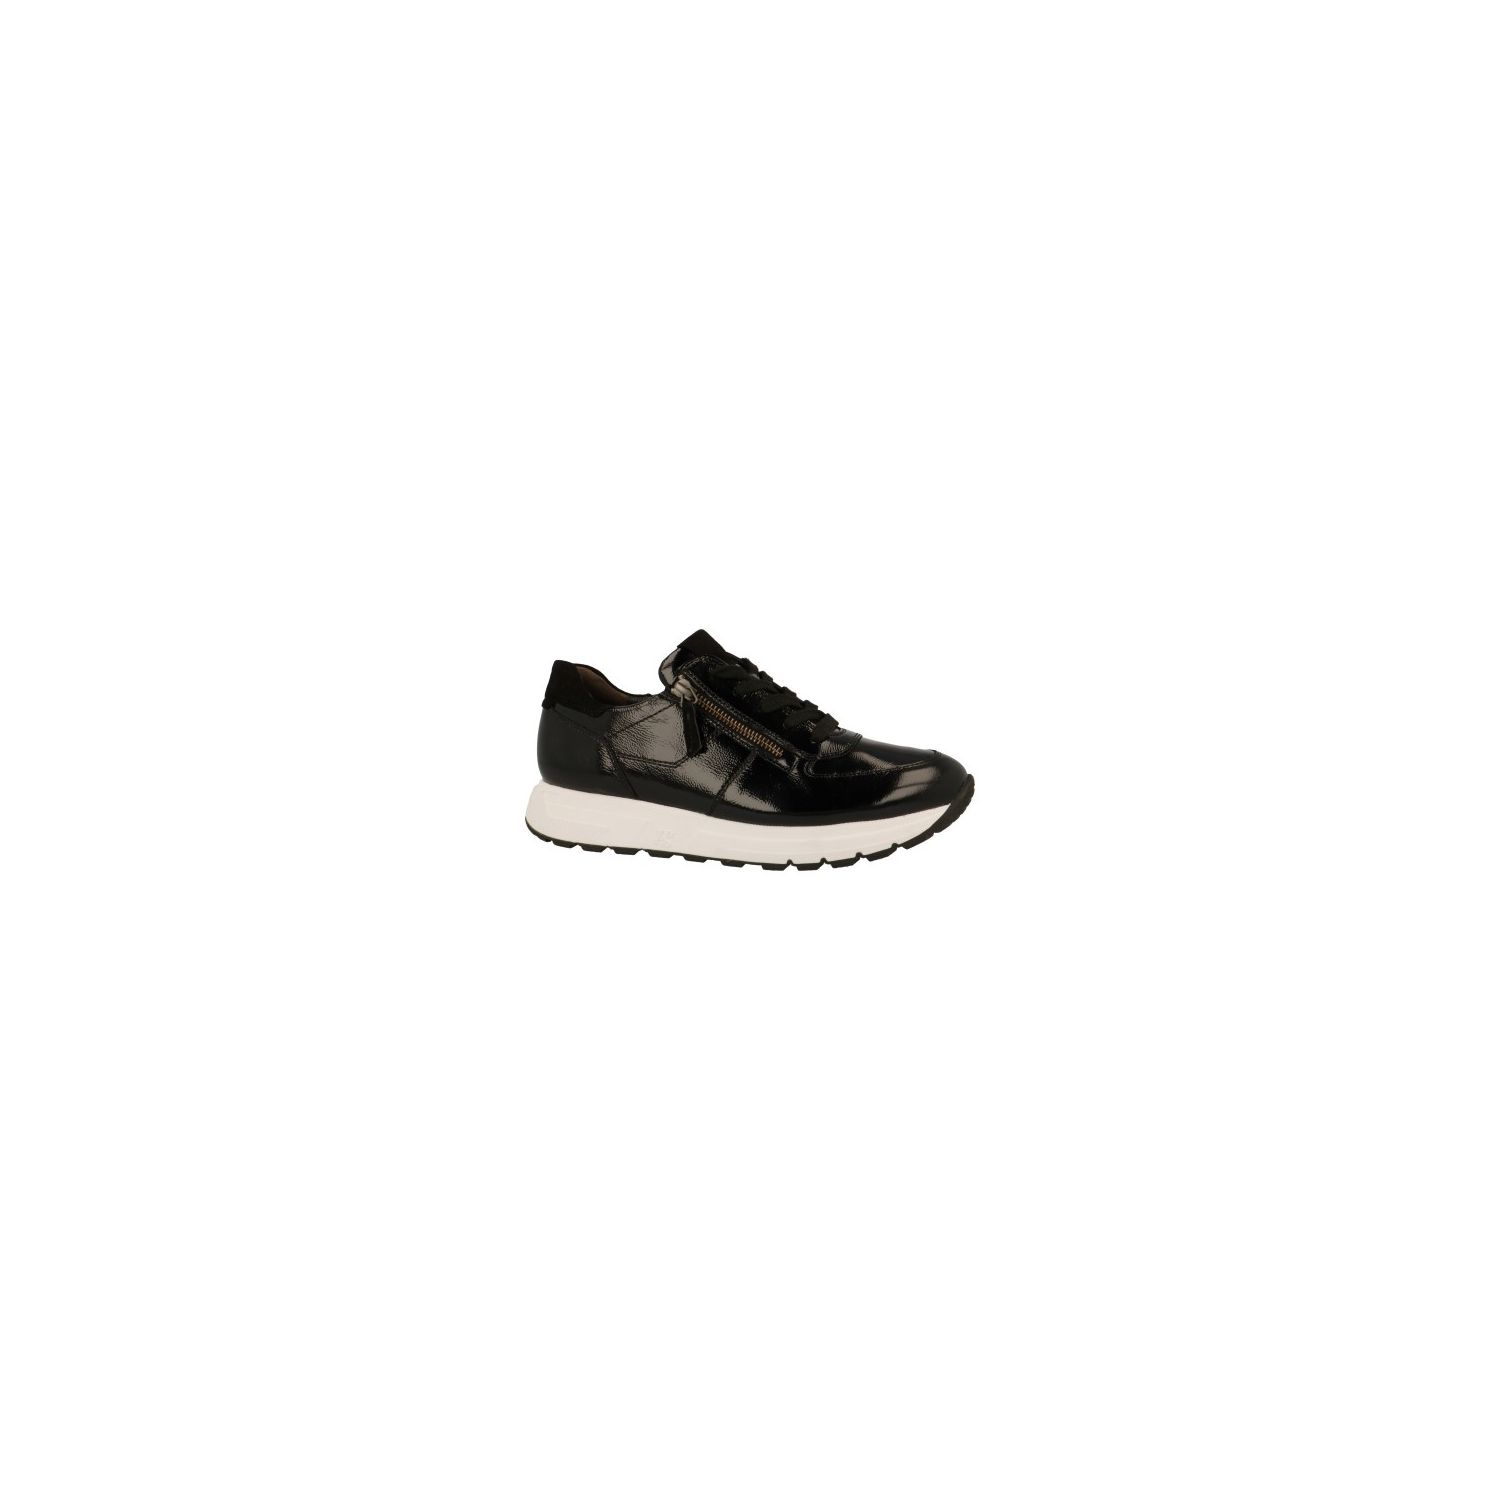 Paul Green 4856-035 sneaker zwartlakcombi